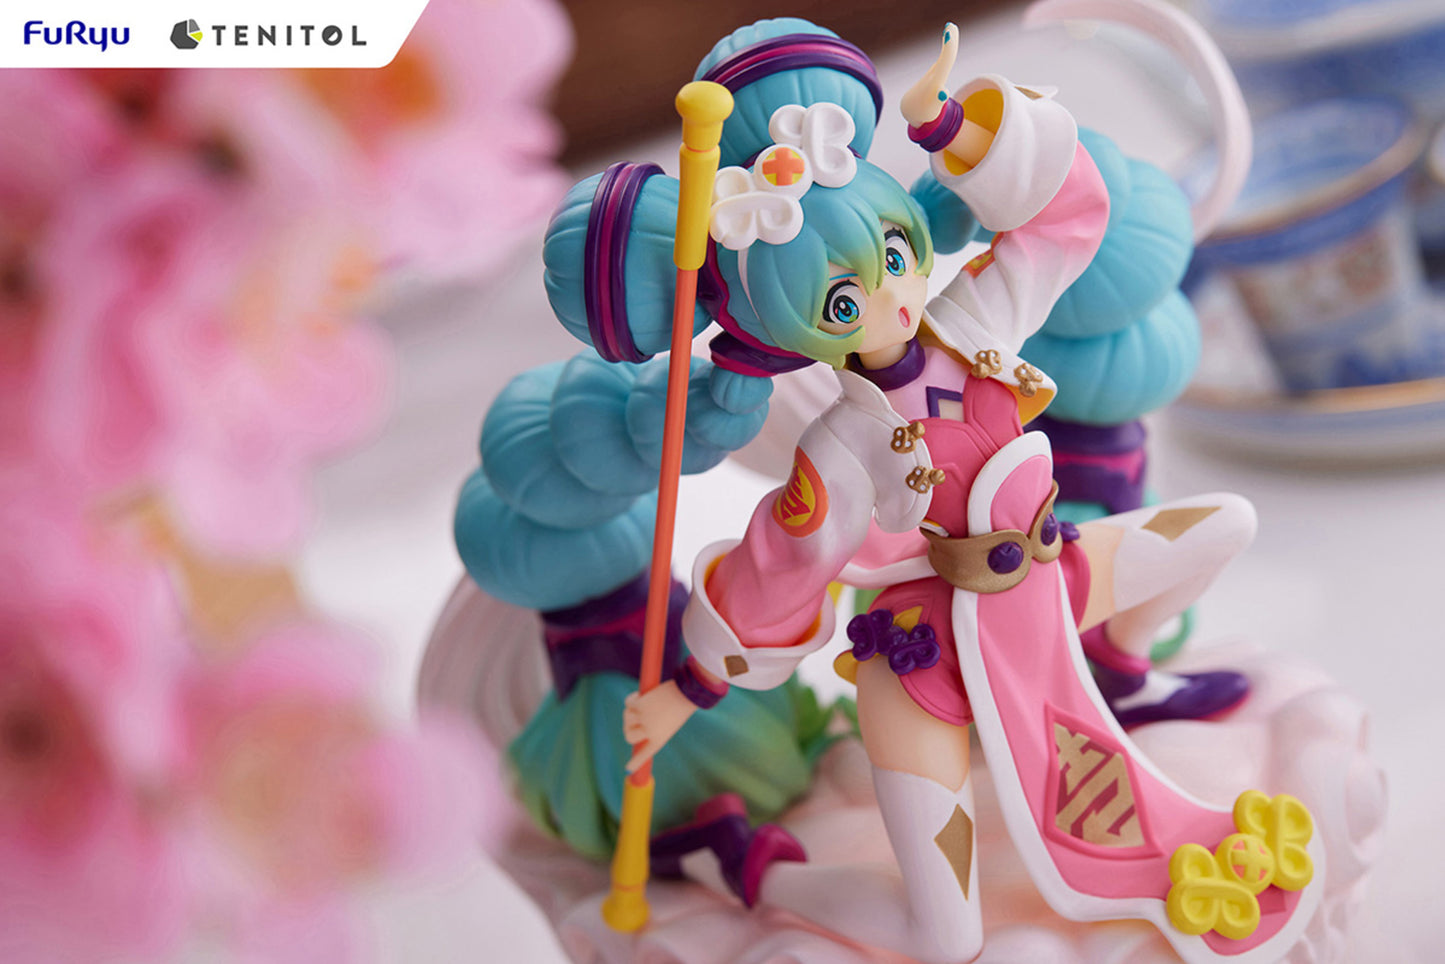 TENITOL Hatsune Miku CHINA Ver. Figure (Coming Soon) - Anime Kyarakutā | Premium Toy and Collectible Shop